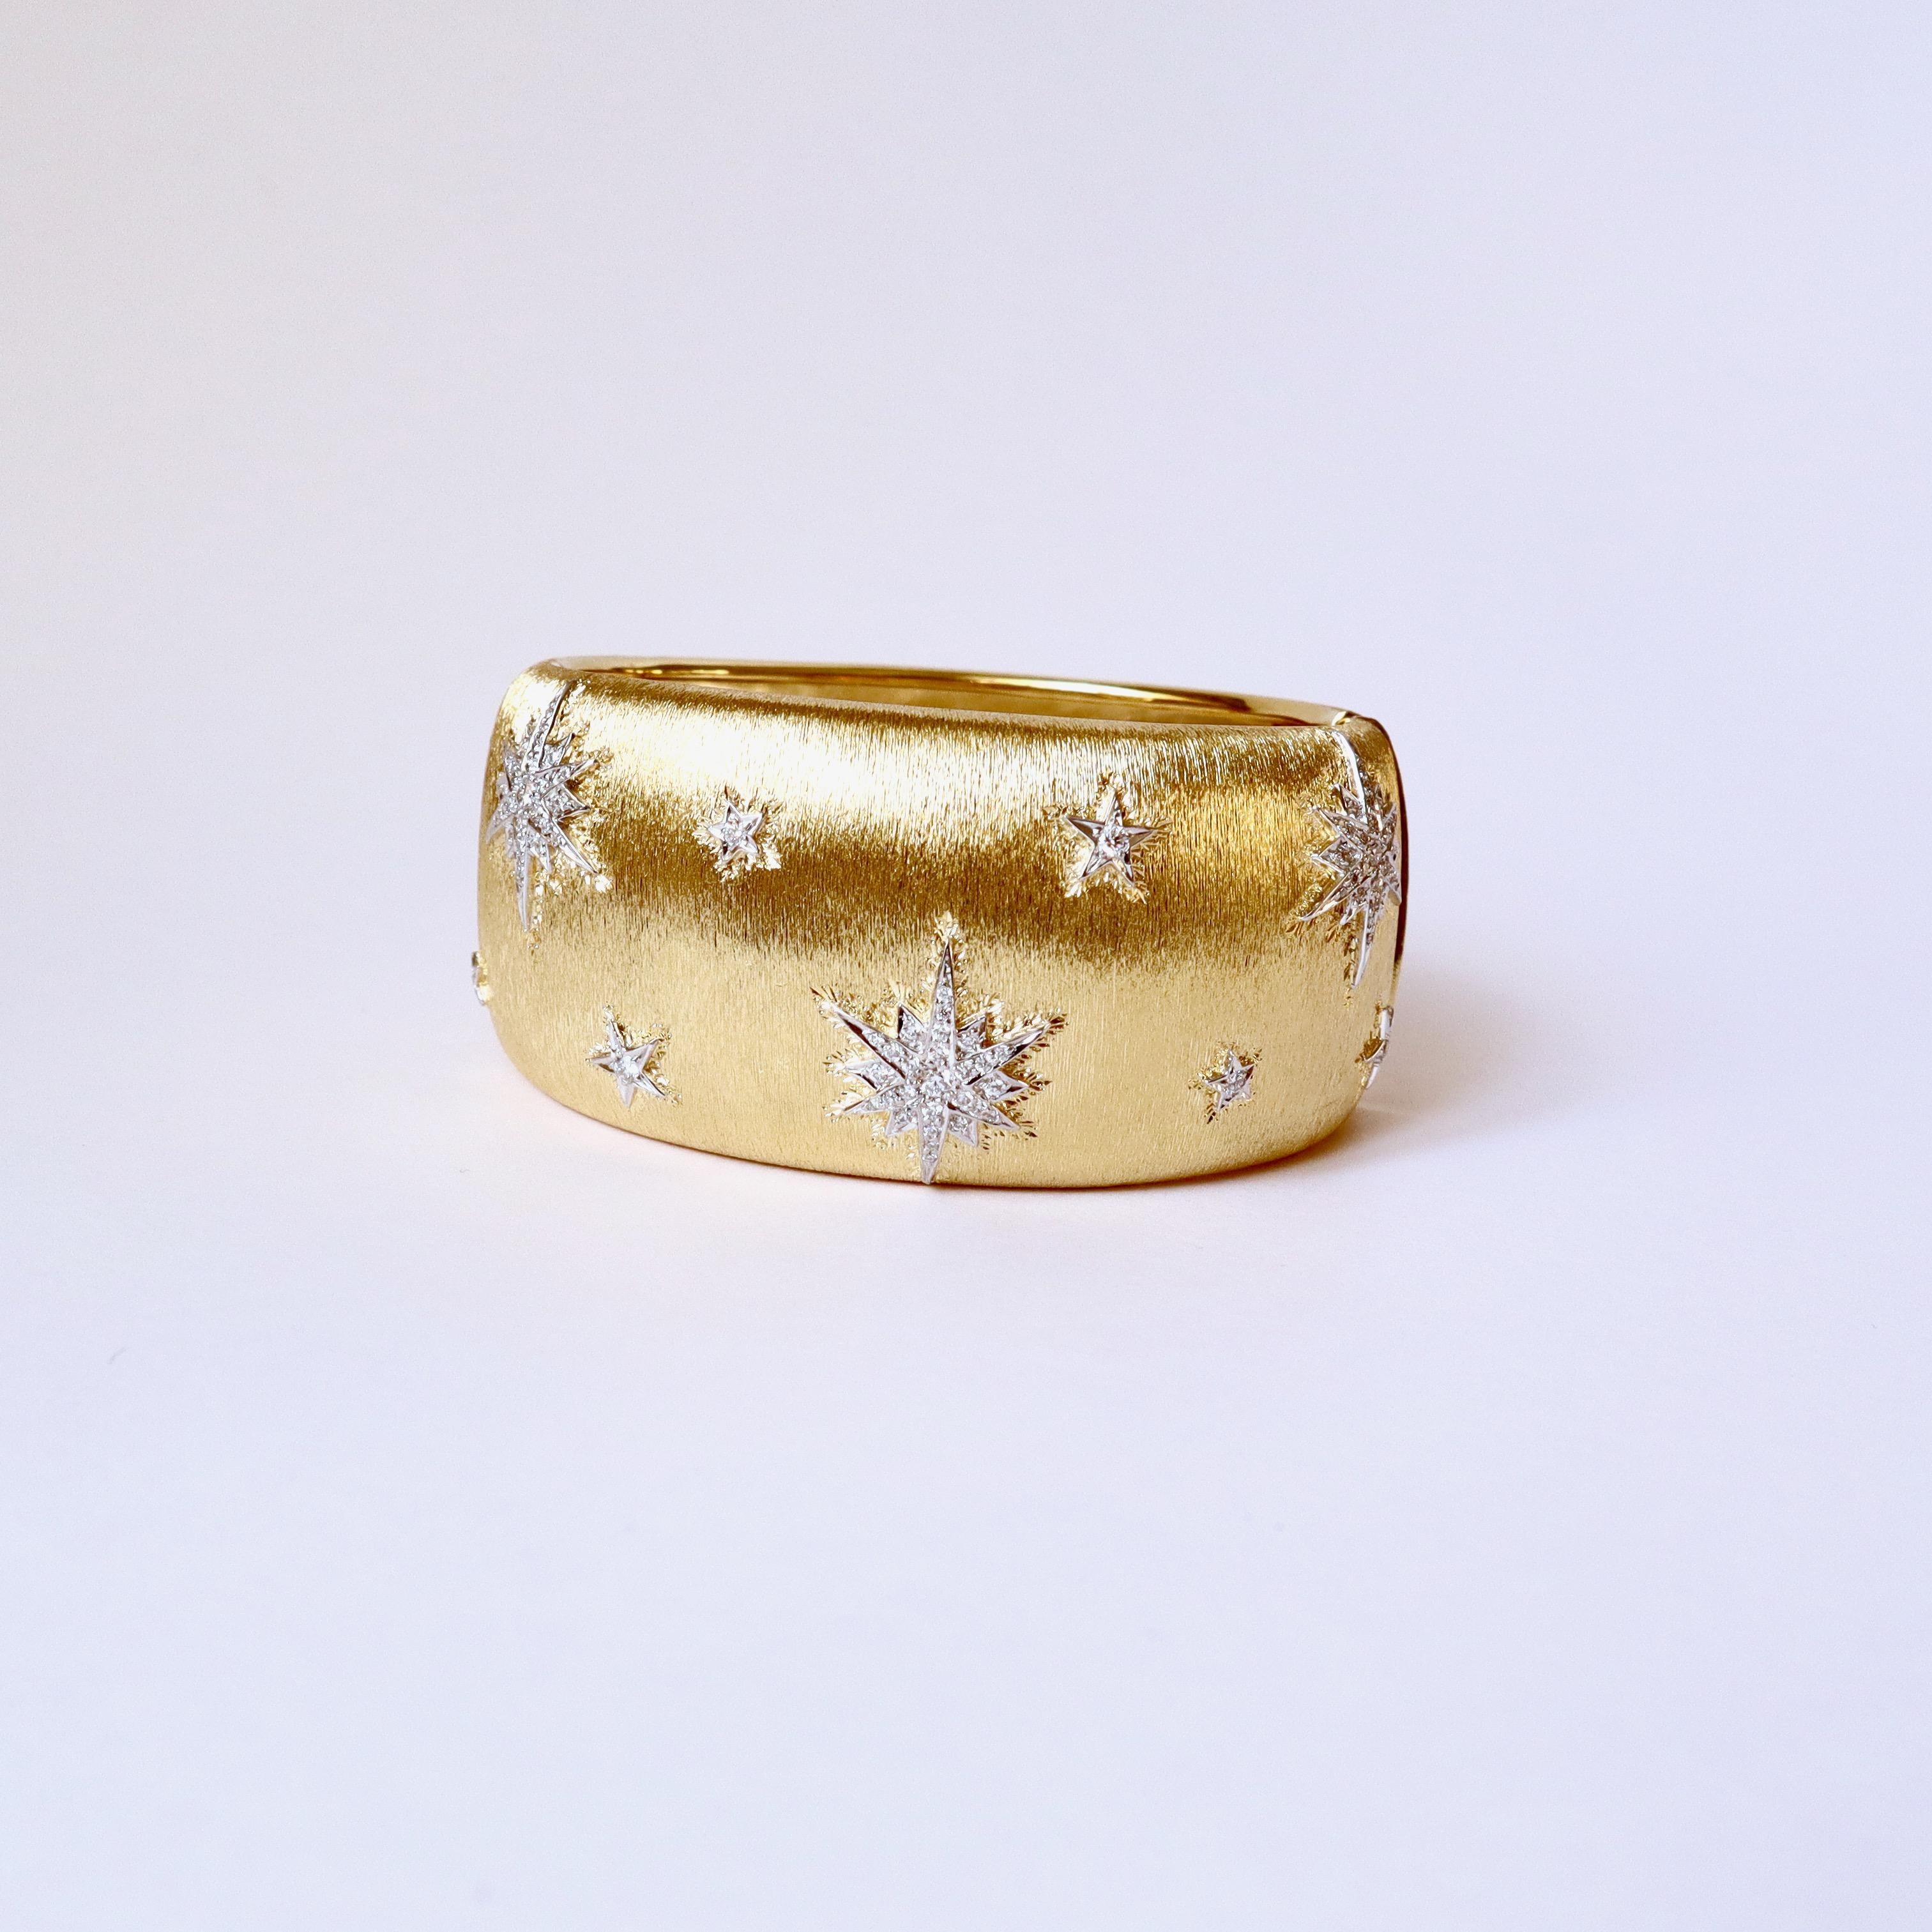 Yellow gold, 18 kt white gold and diamond bracelet with star motif (Buccellati type)
Rigid opening bracelet in 18 kt yellow gold, grooved domed with star motif in 18 kt white gold applied, set with diamonds, opening.
Diamond weight: 0.8